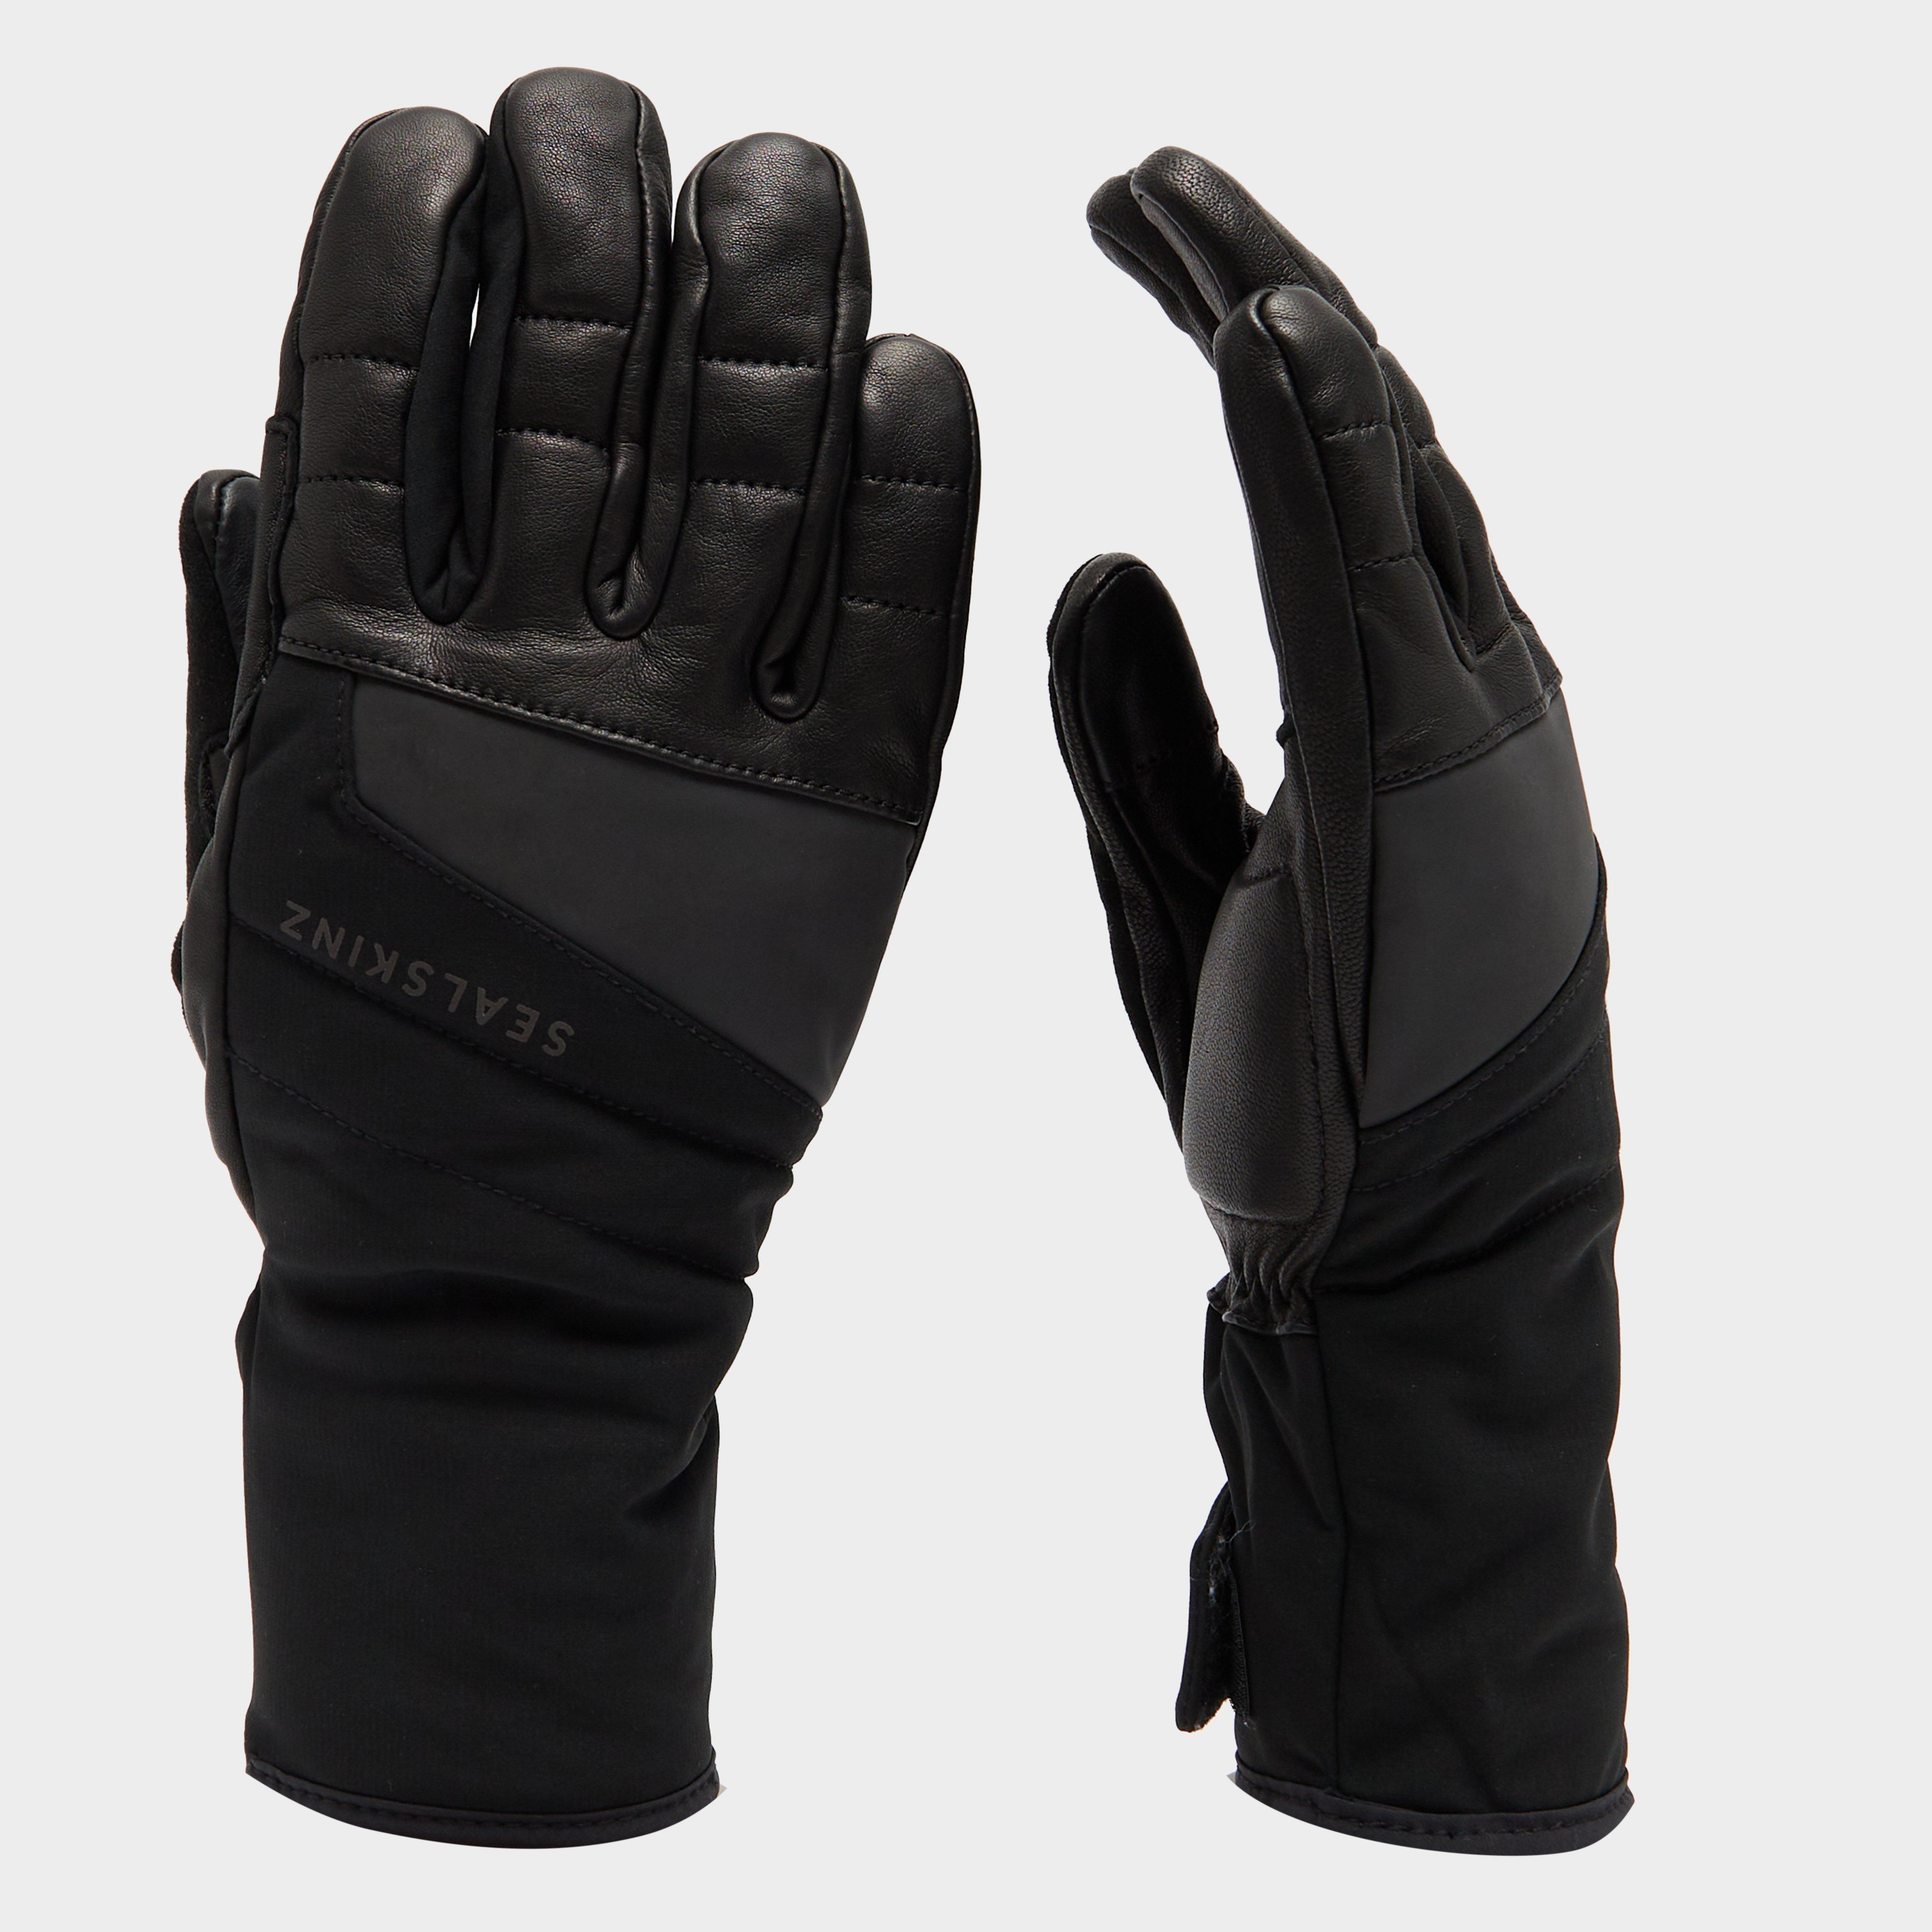  Sealskinz Waterproof Extreme Cold Weather Gauntlet in Black, Black